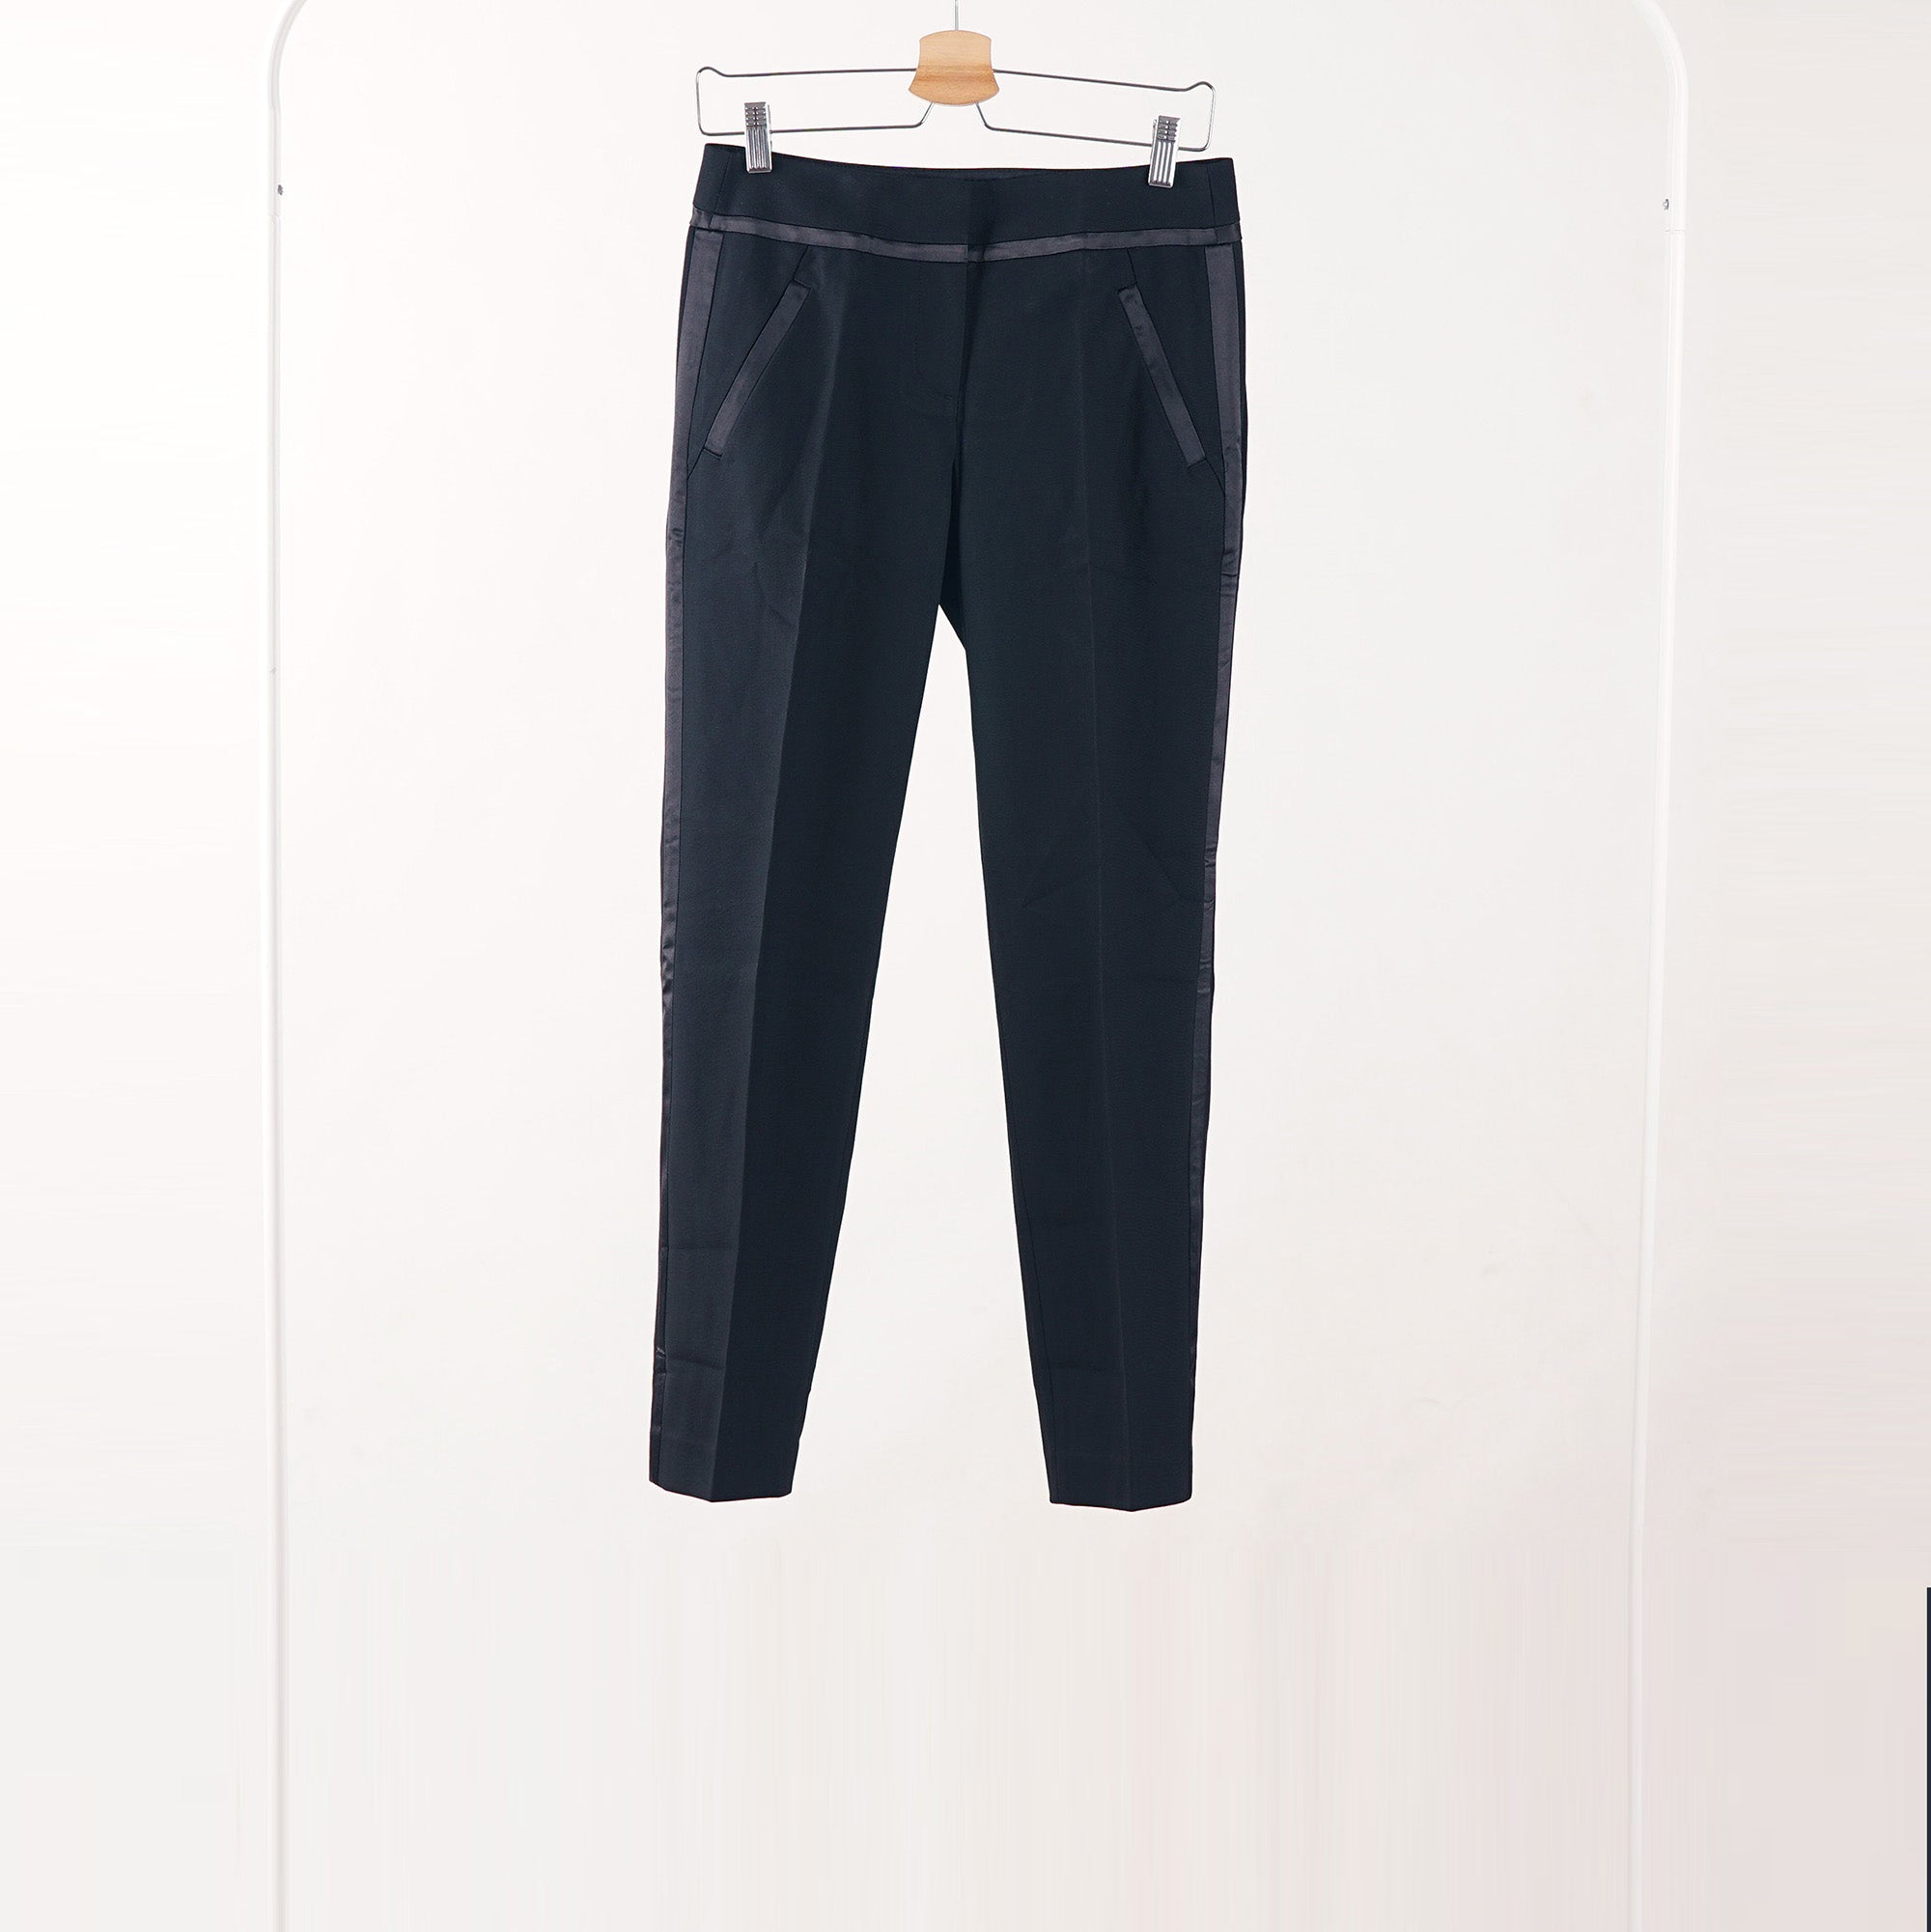 Celana Wanita -Striped Black Pants (LDW 71)